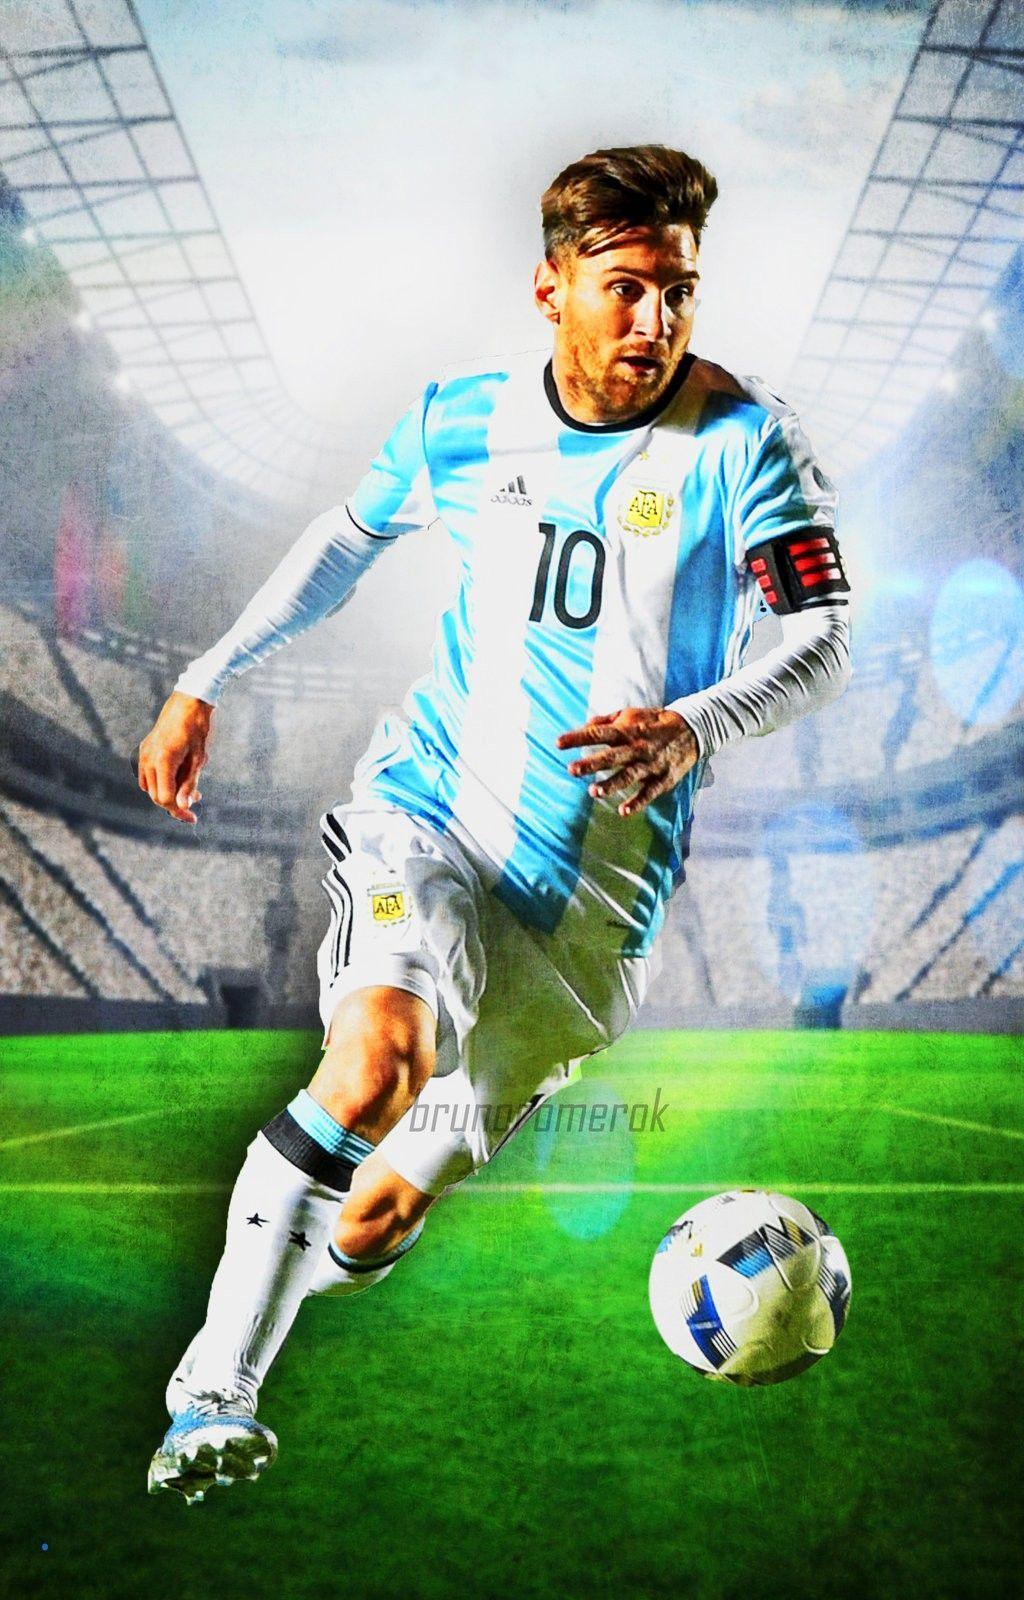 Wallpaper wallpaper, sport, logo, Argentina, football images for desktop,  section спорт - download